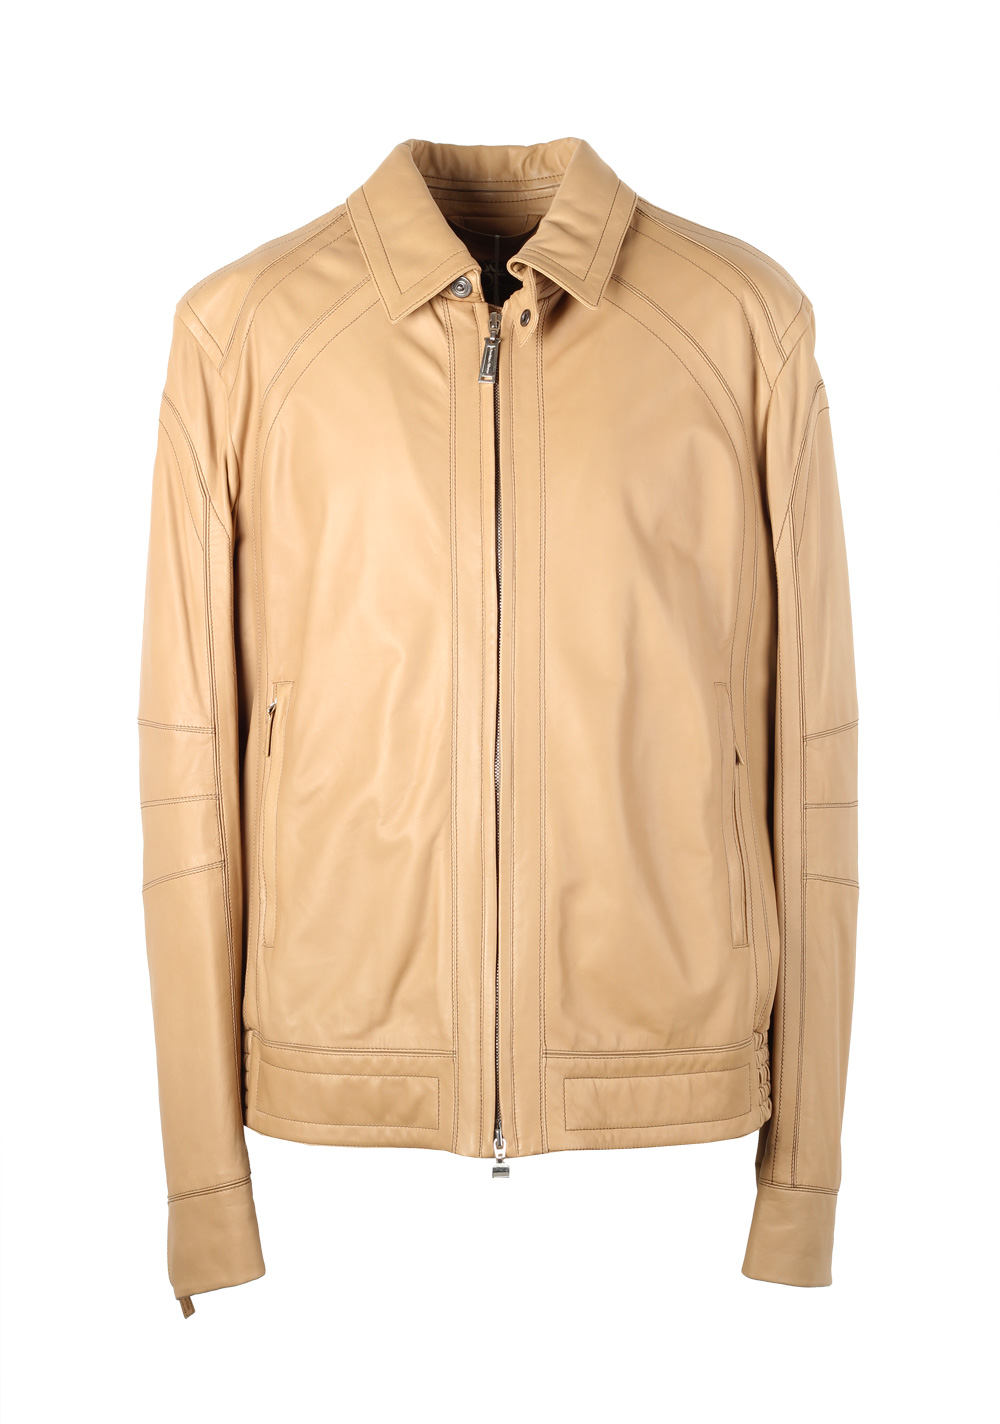 Massimo Sforza Beige Leather Coat Jacket Size 58 / 48R U.S. | Costume Limité